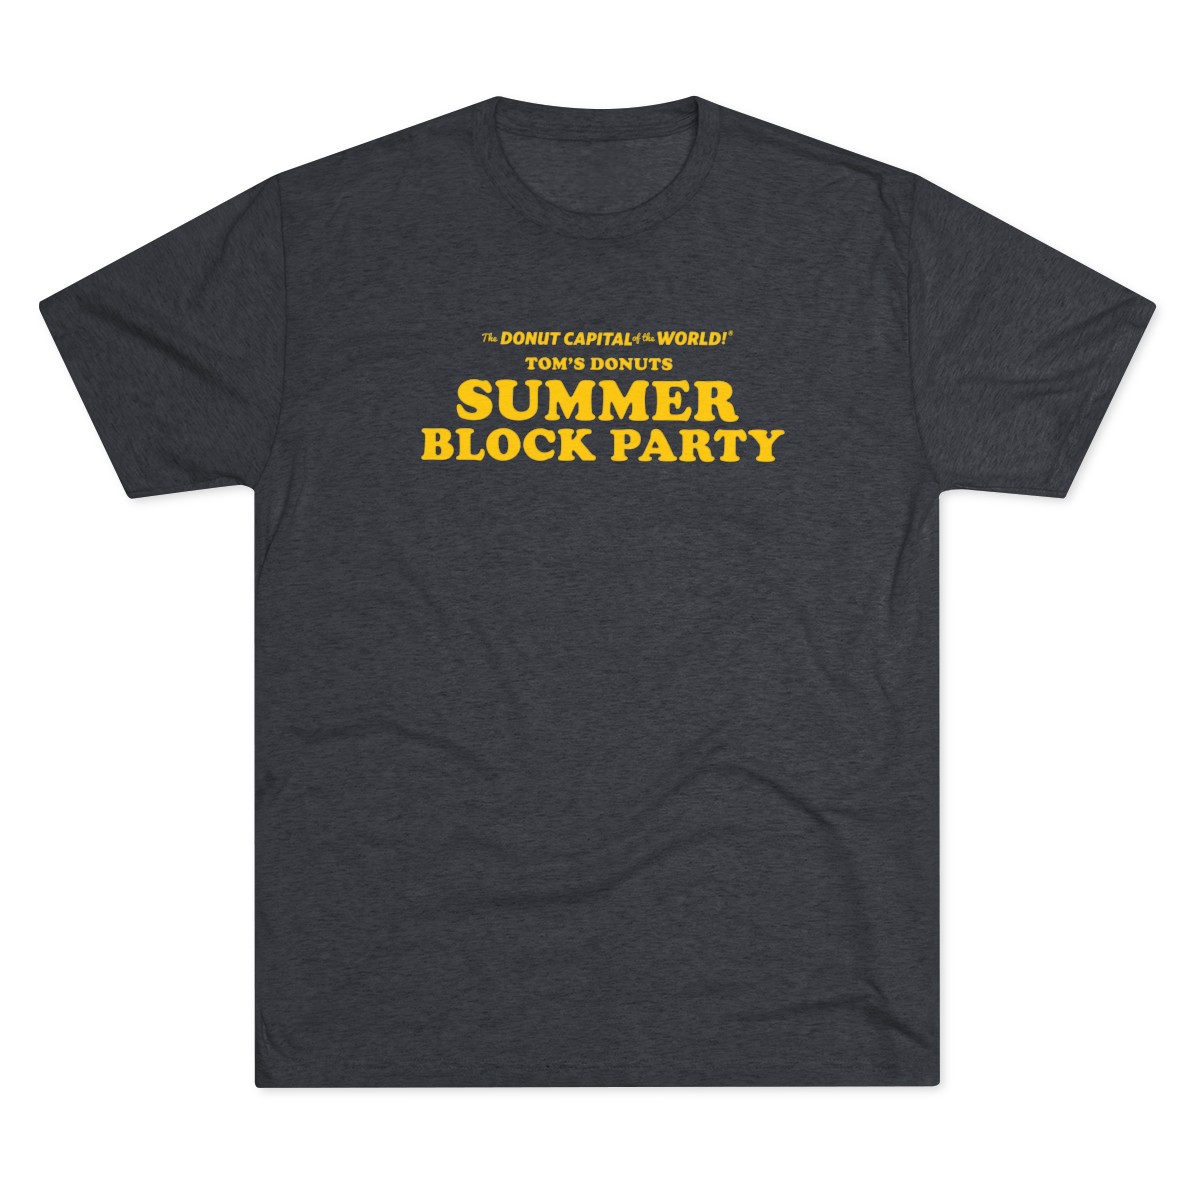 Tom’s Donut Original “SUMMER BLOCK PARTY” T-shirt